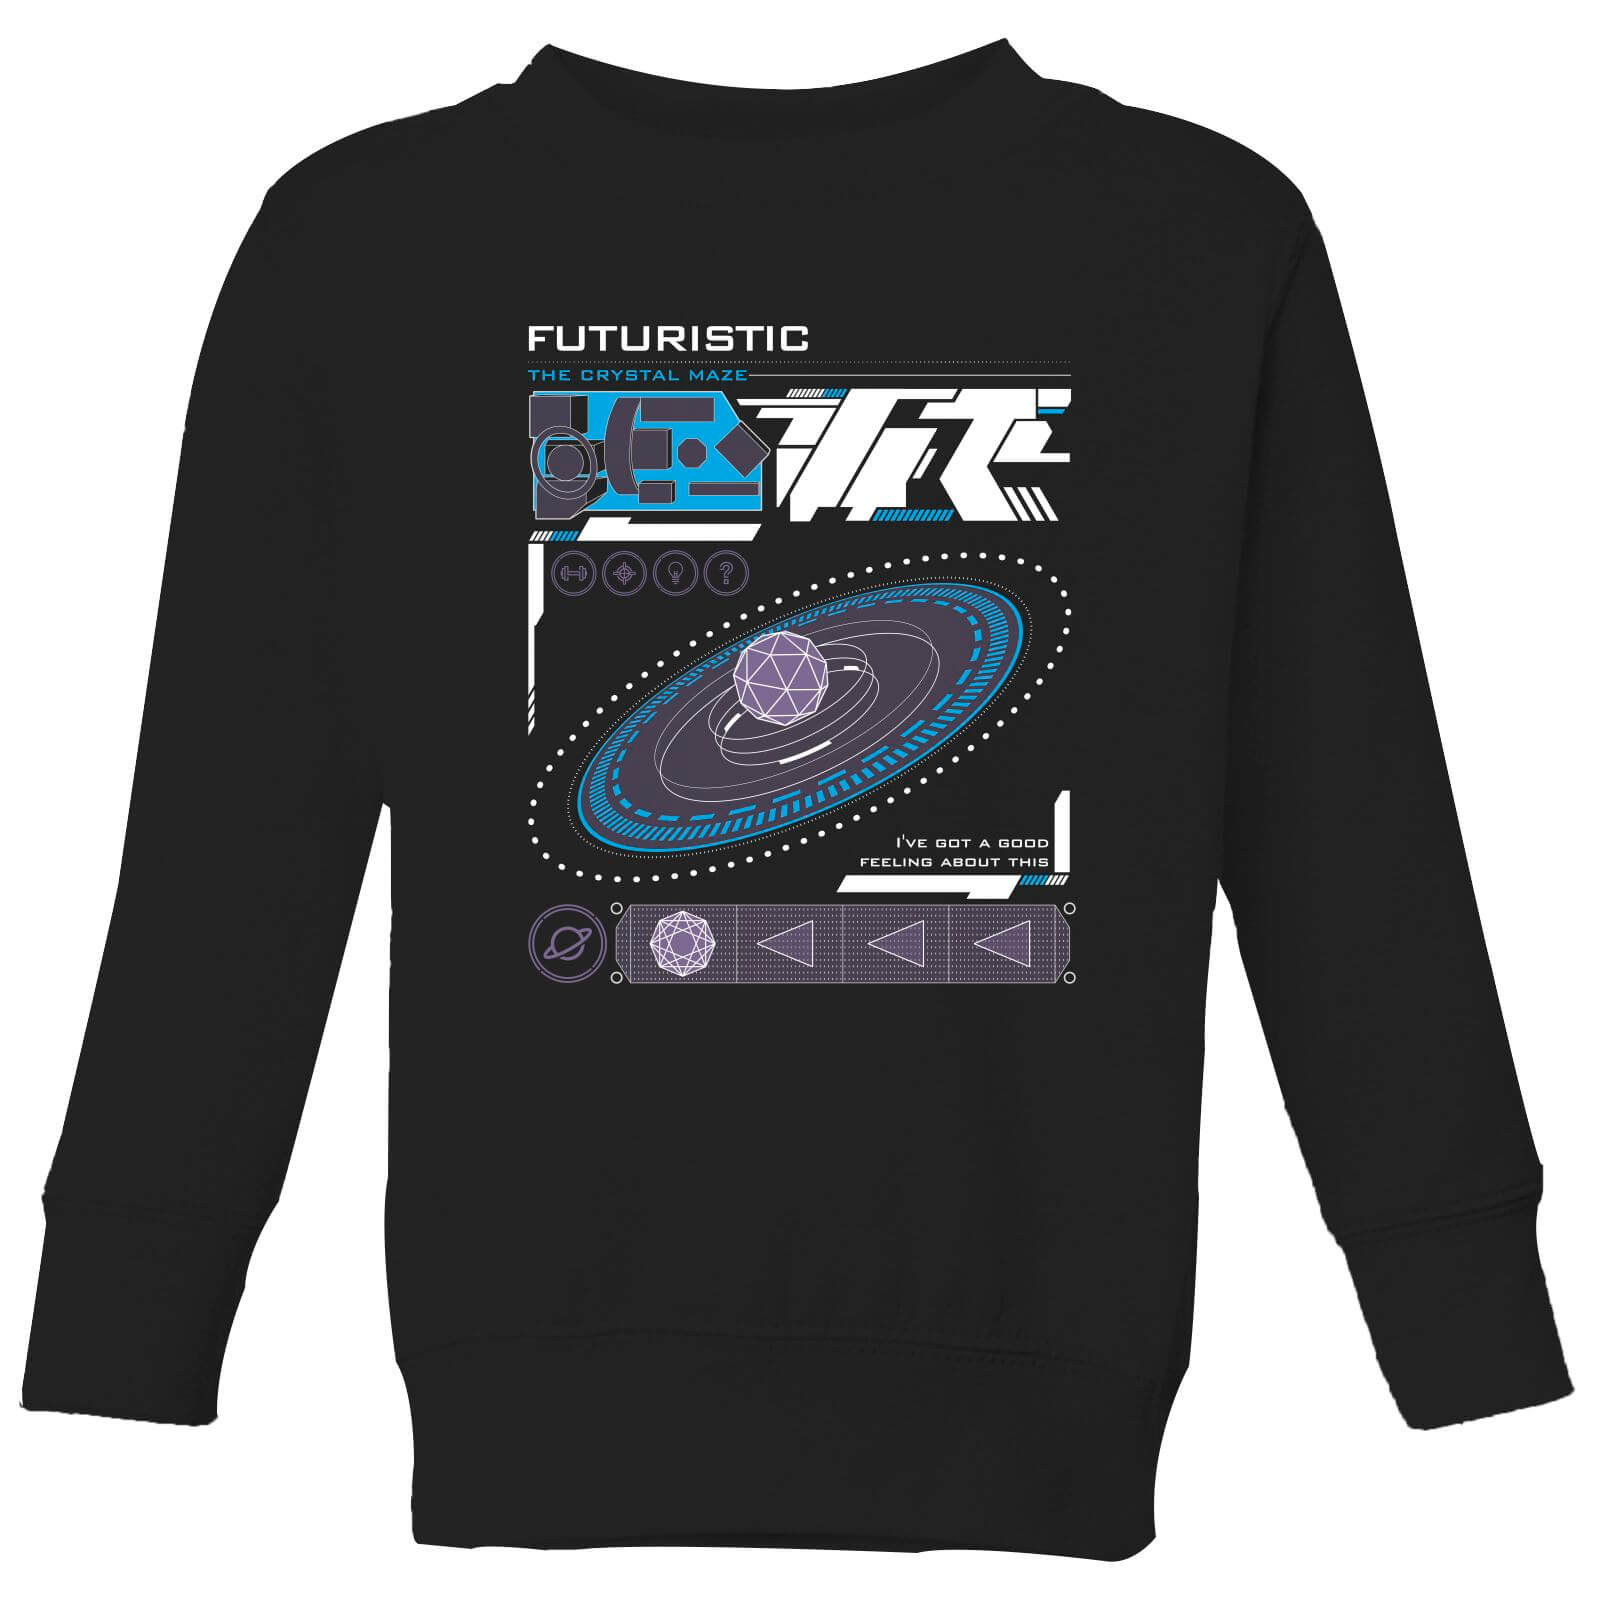 Crystal Maze Futuristic Zone Kids' Sweatshirt - Black - 3-4 Years - Black